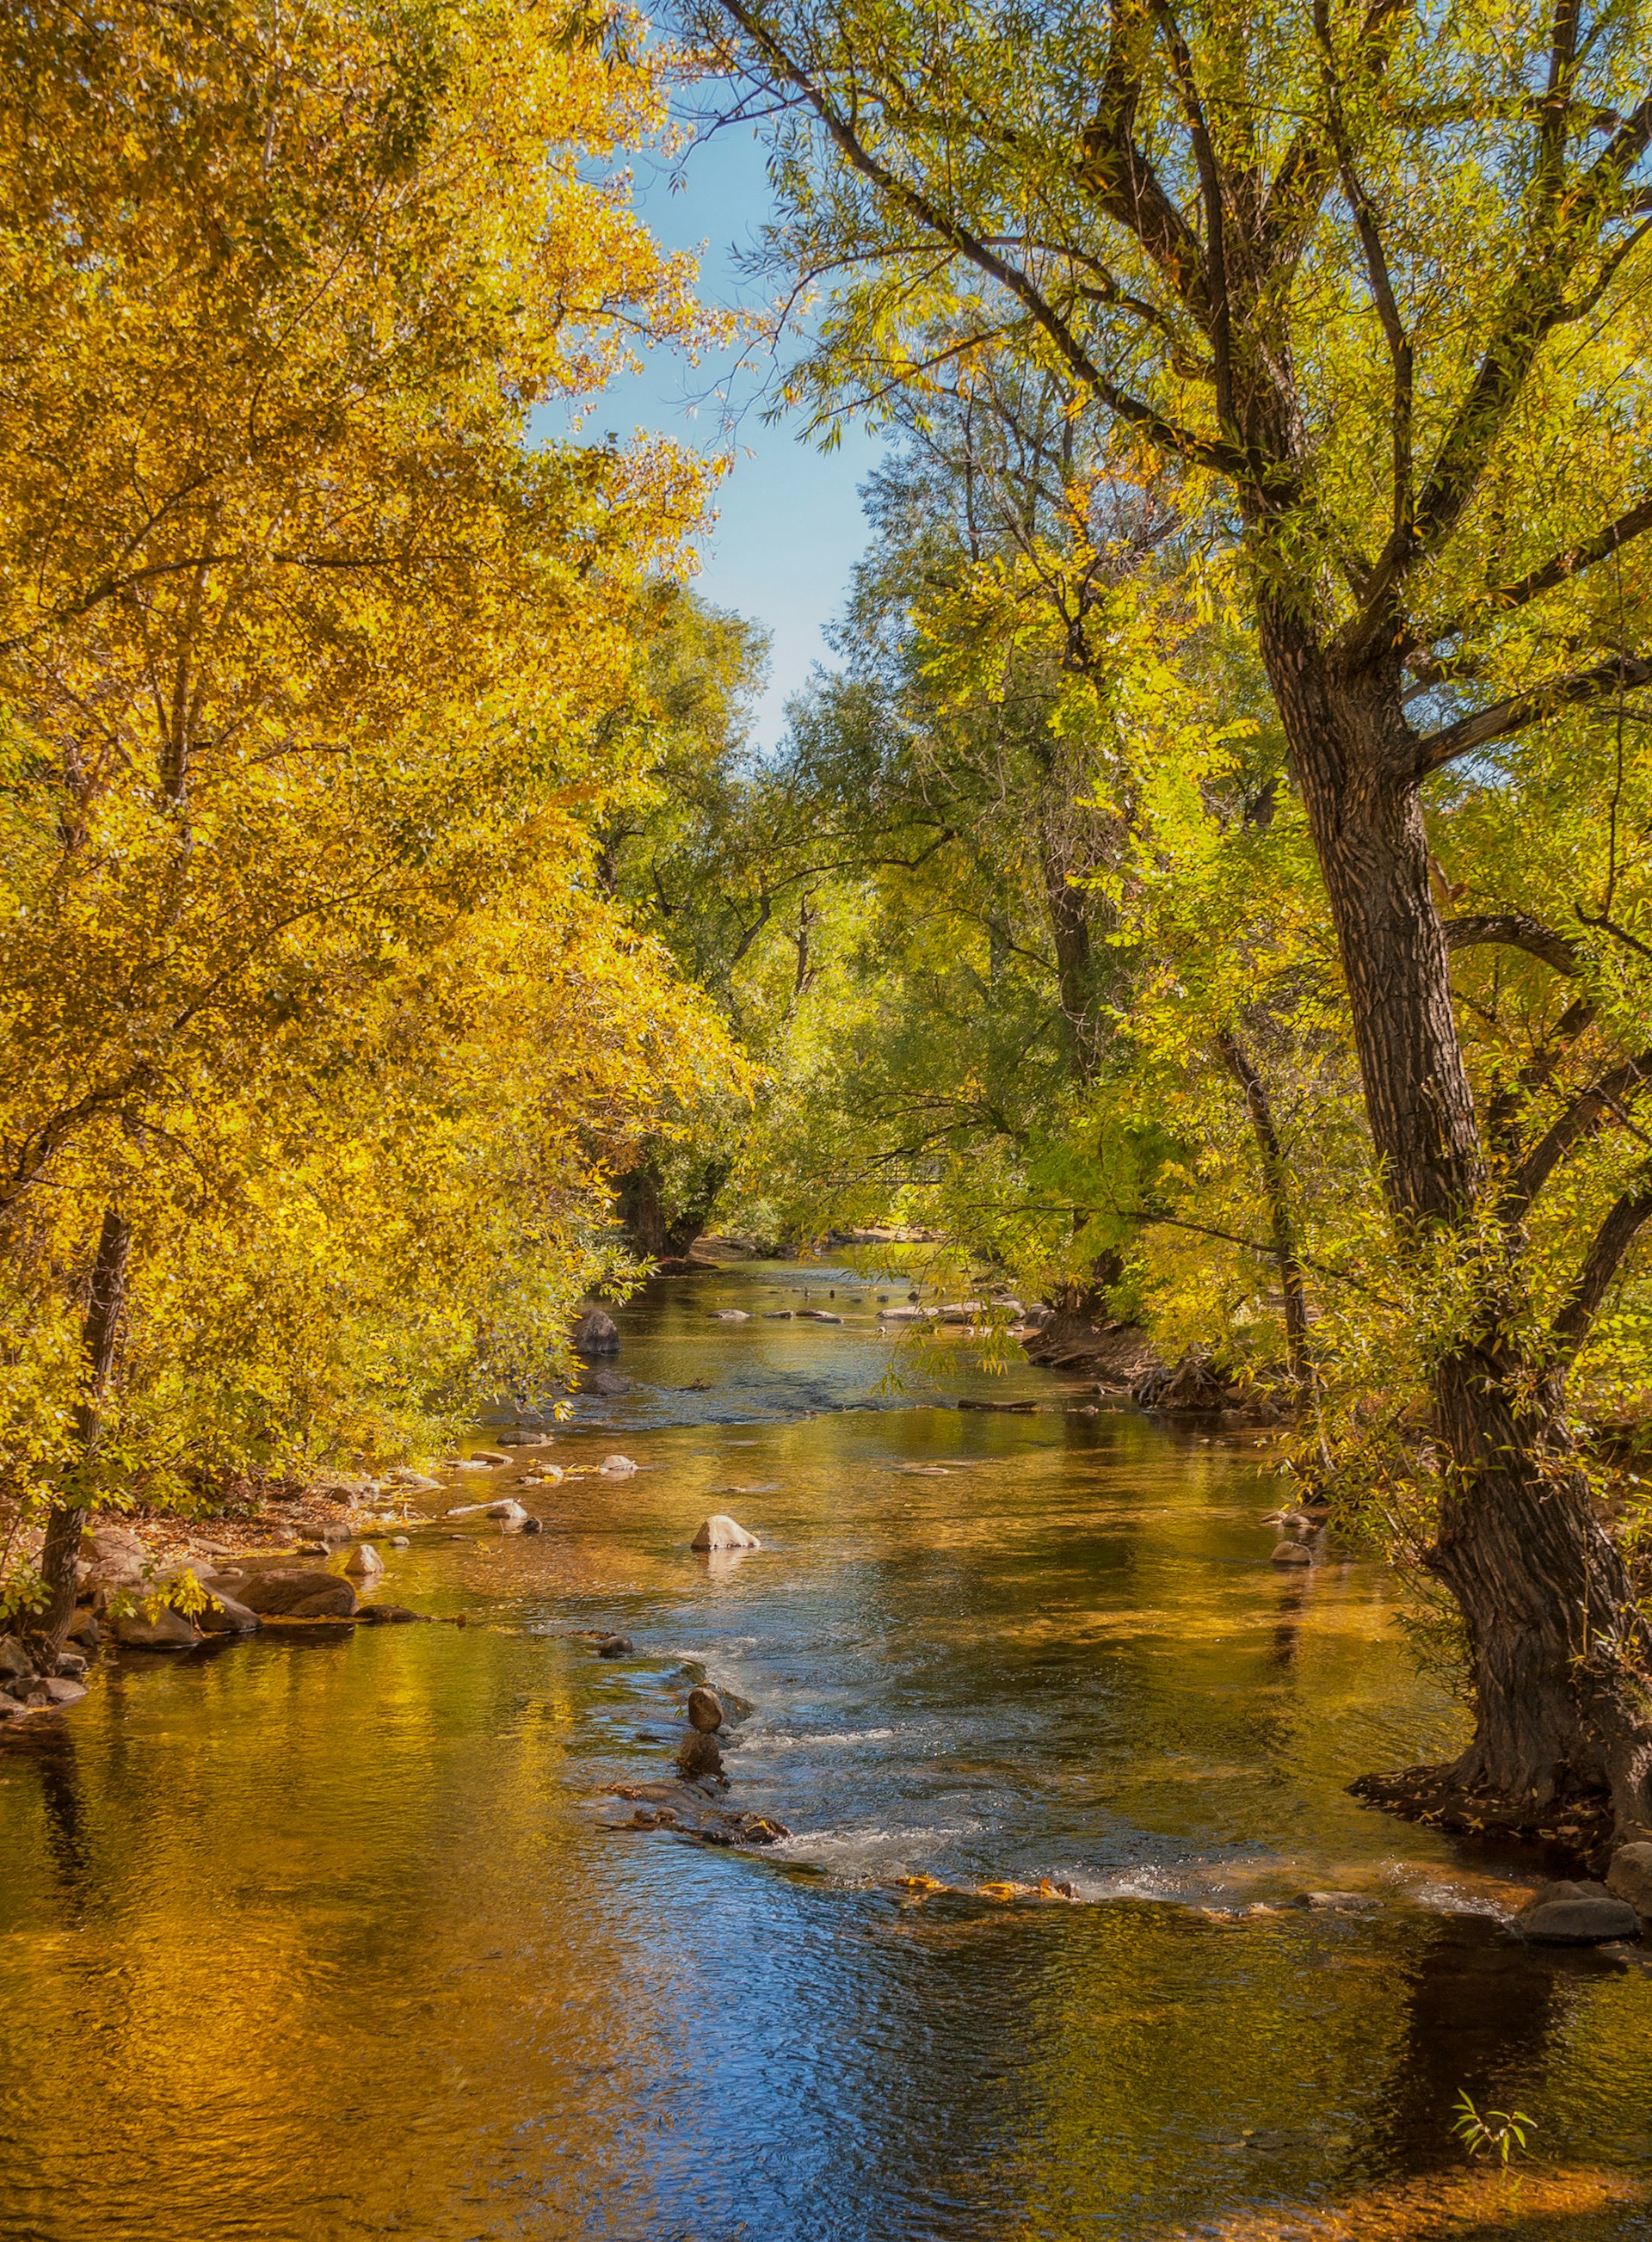 View of autumn foliage by Boulder Creek, Colorado